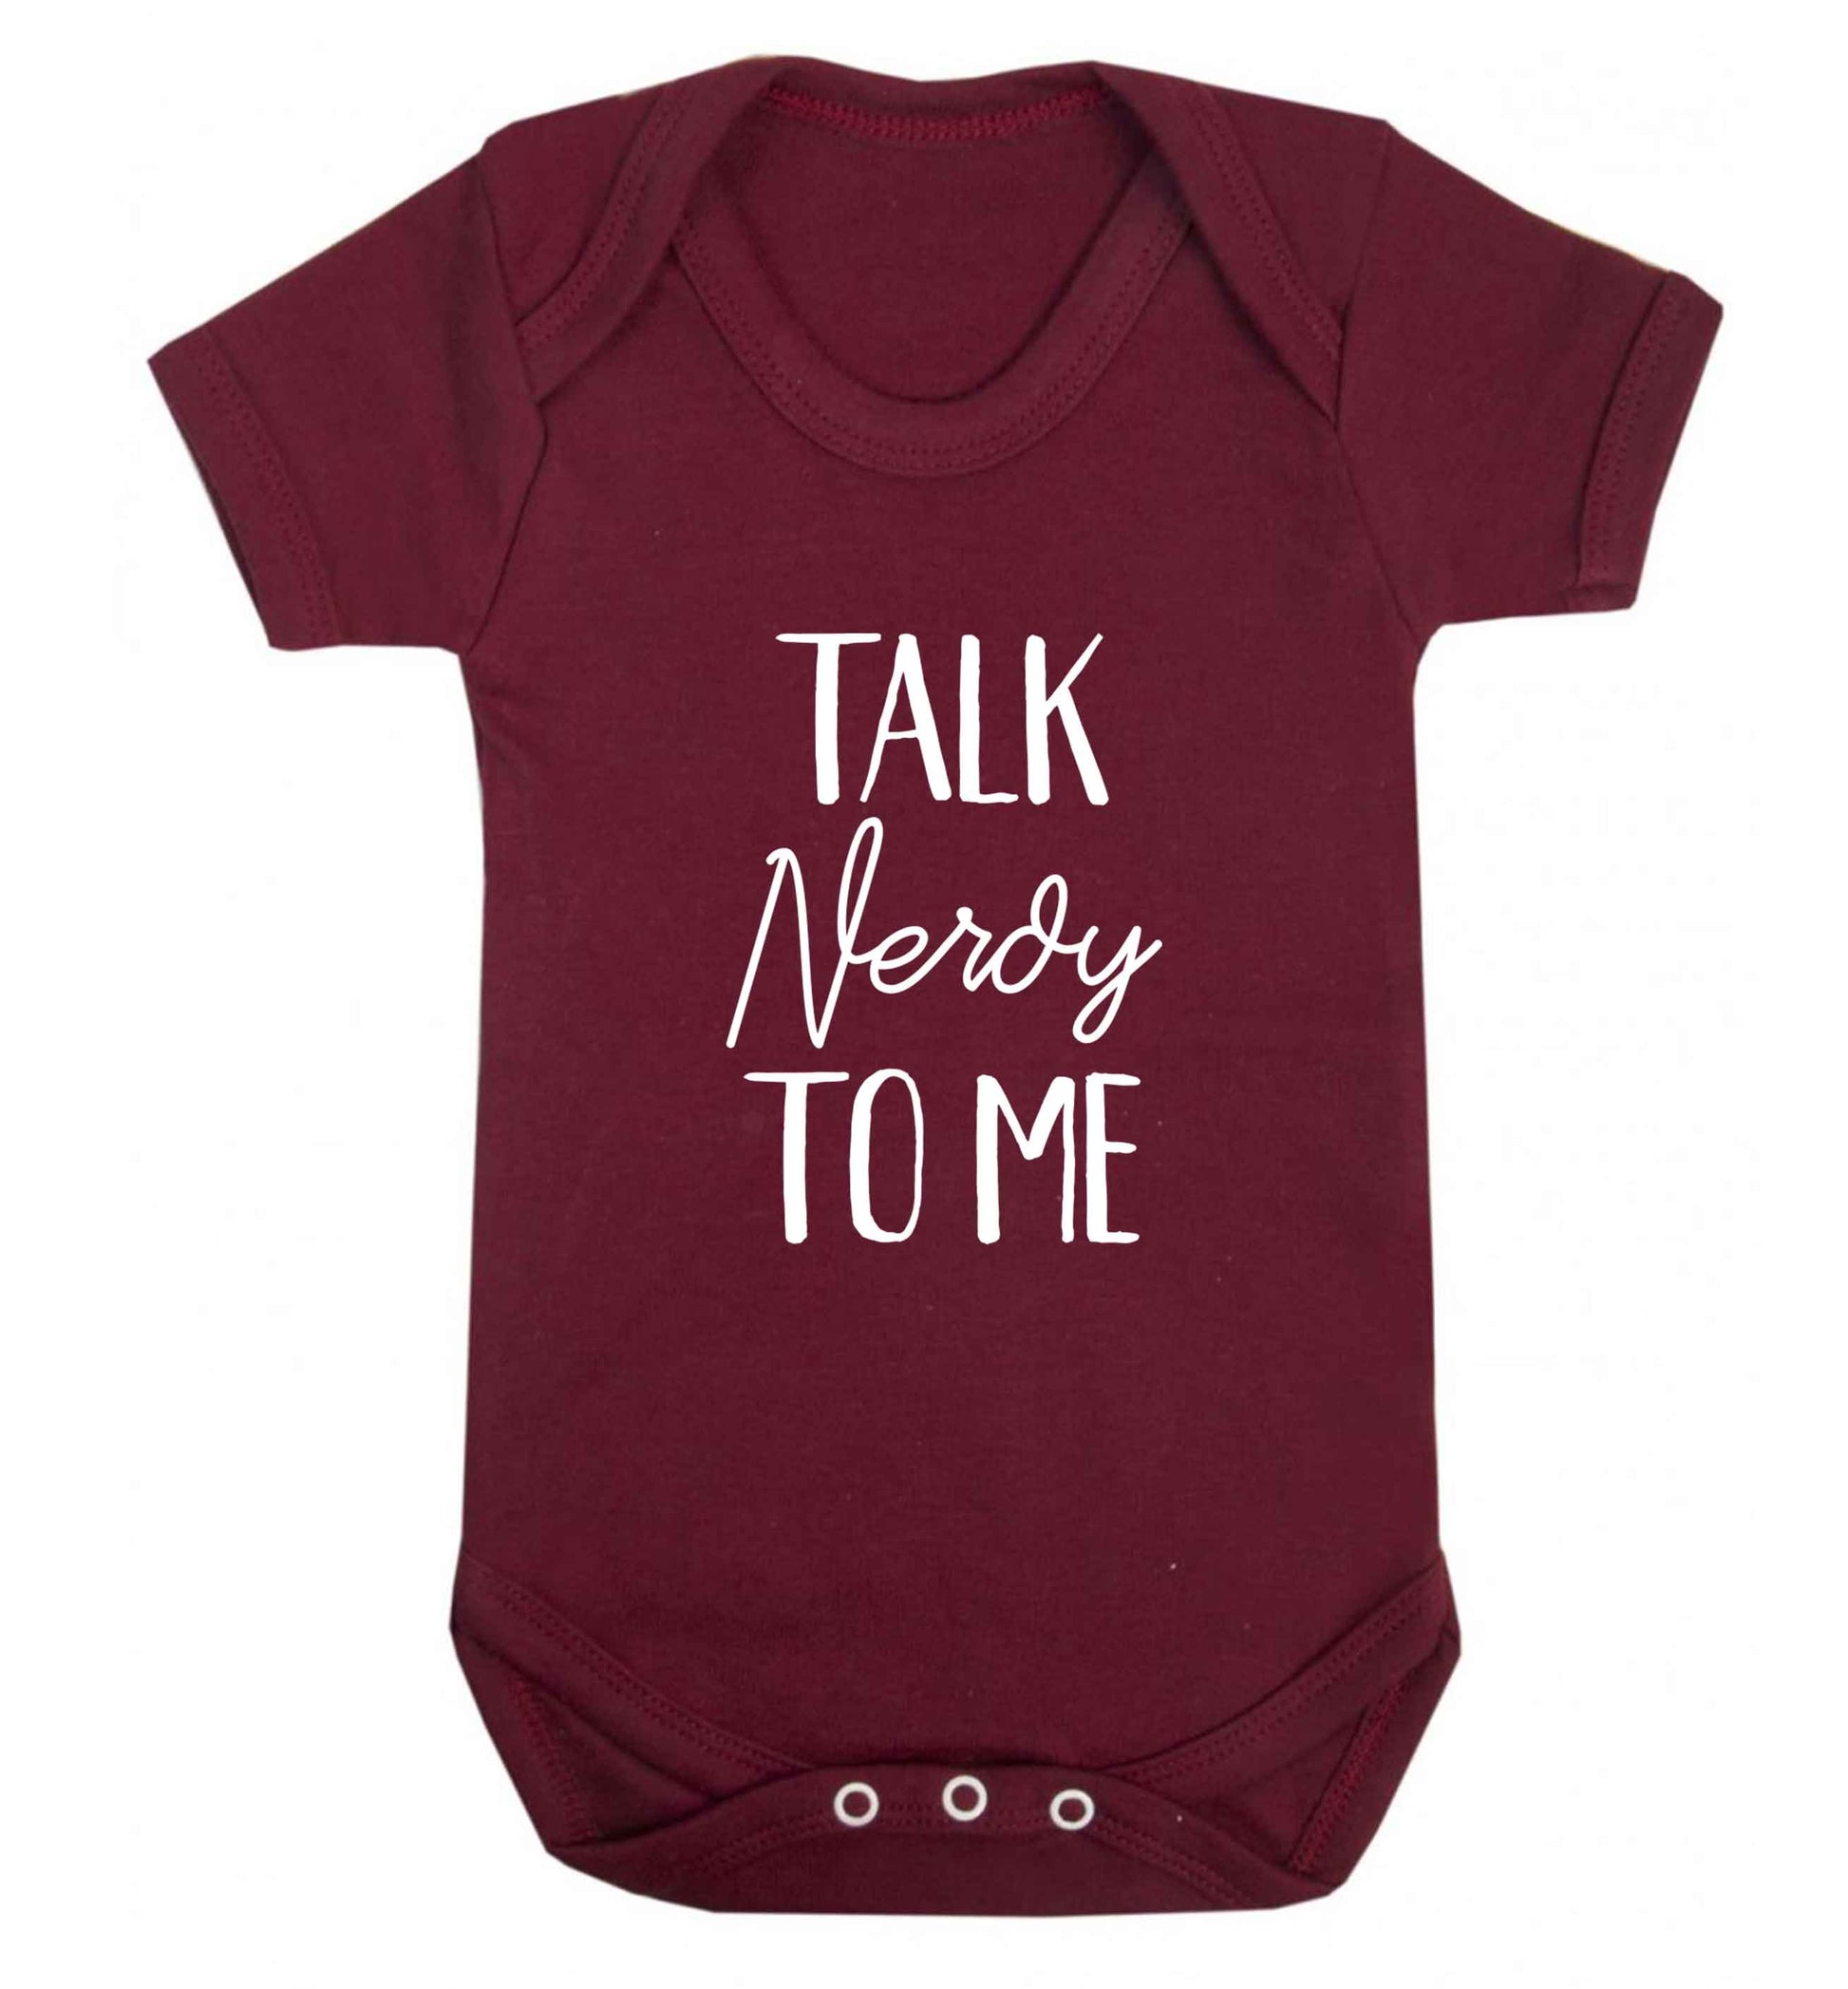 Talk nerdy to me baby vest maroon 18-24 months